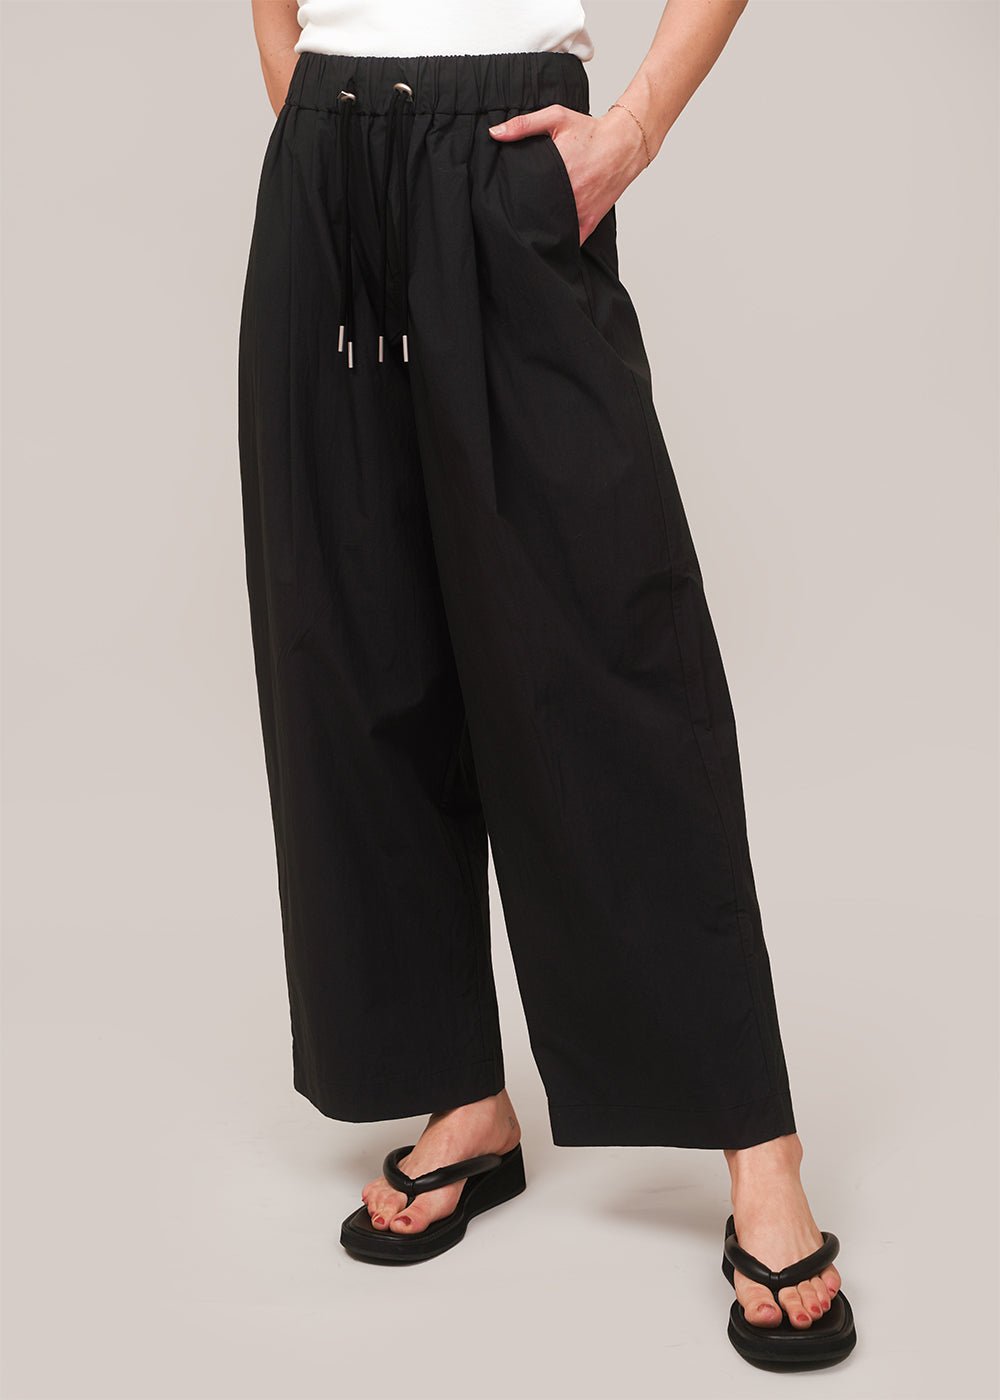 COS A-line Dress Relax Fit Black Mini Pockets Drawstring S